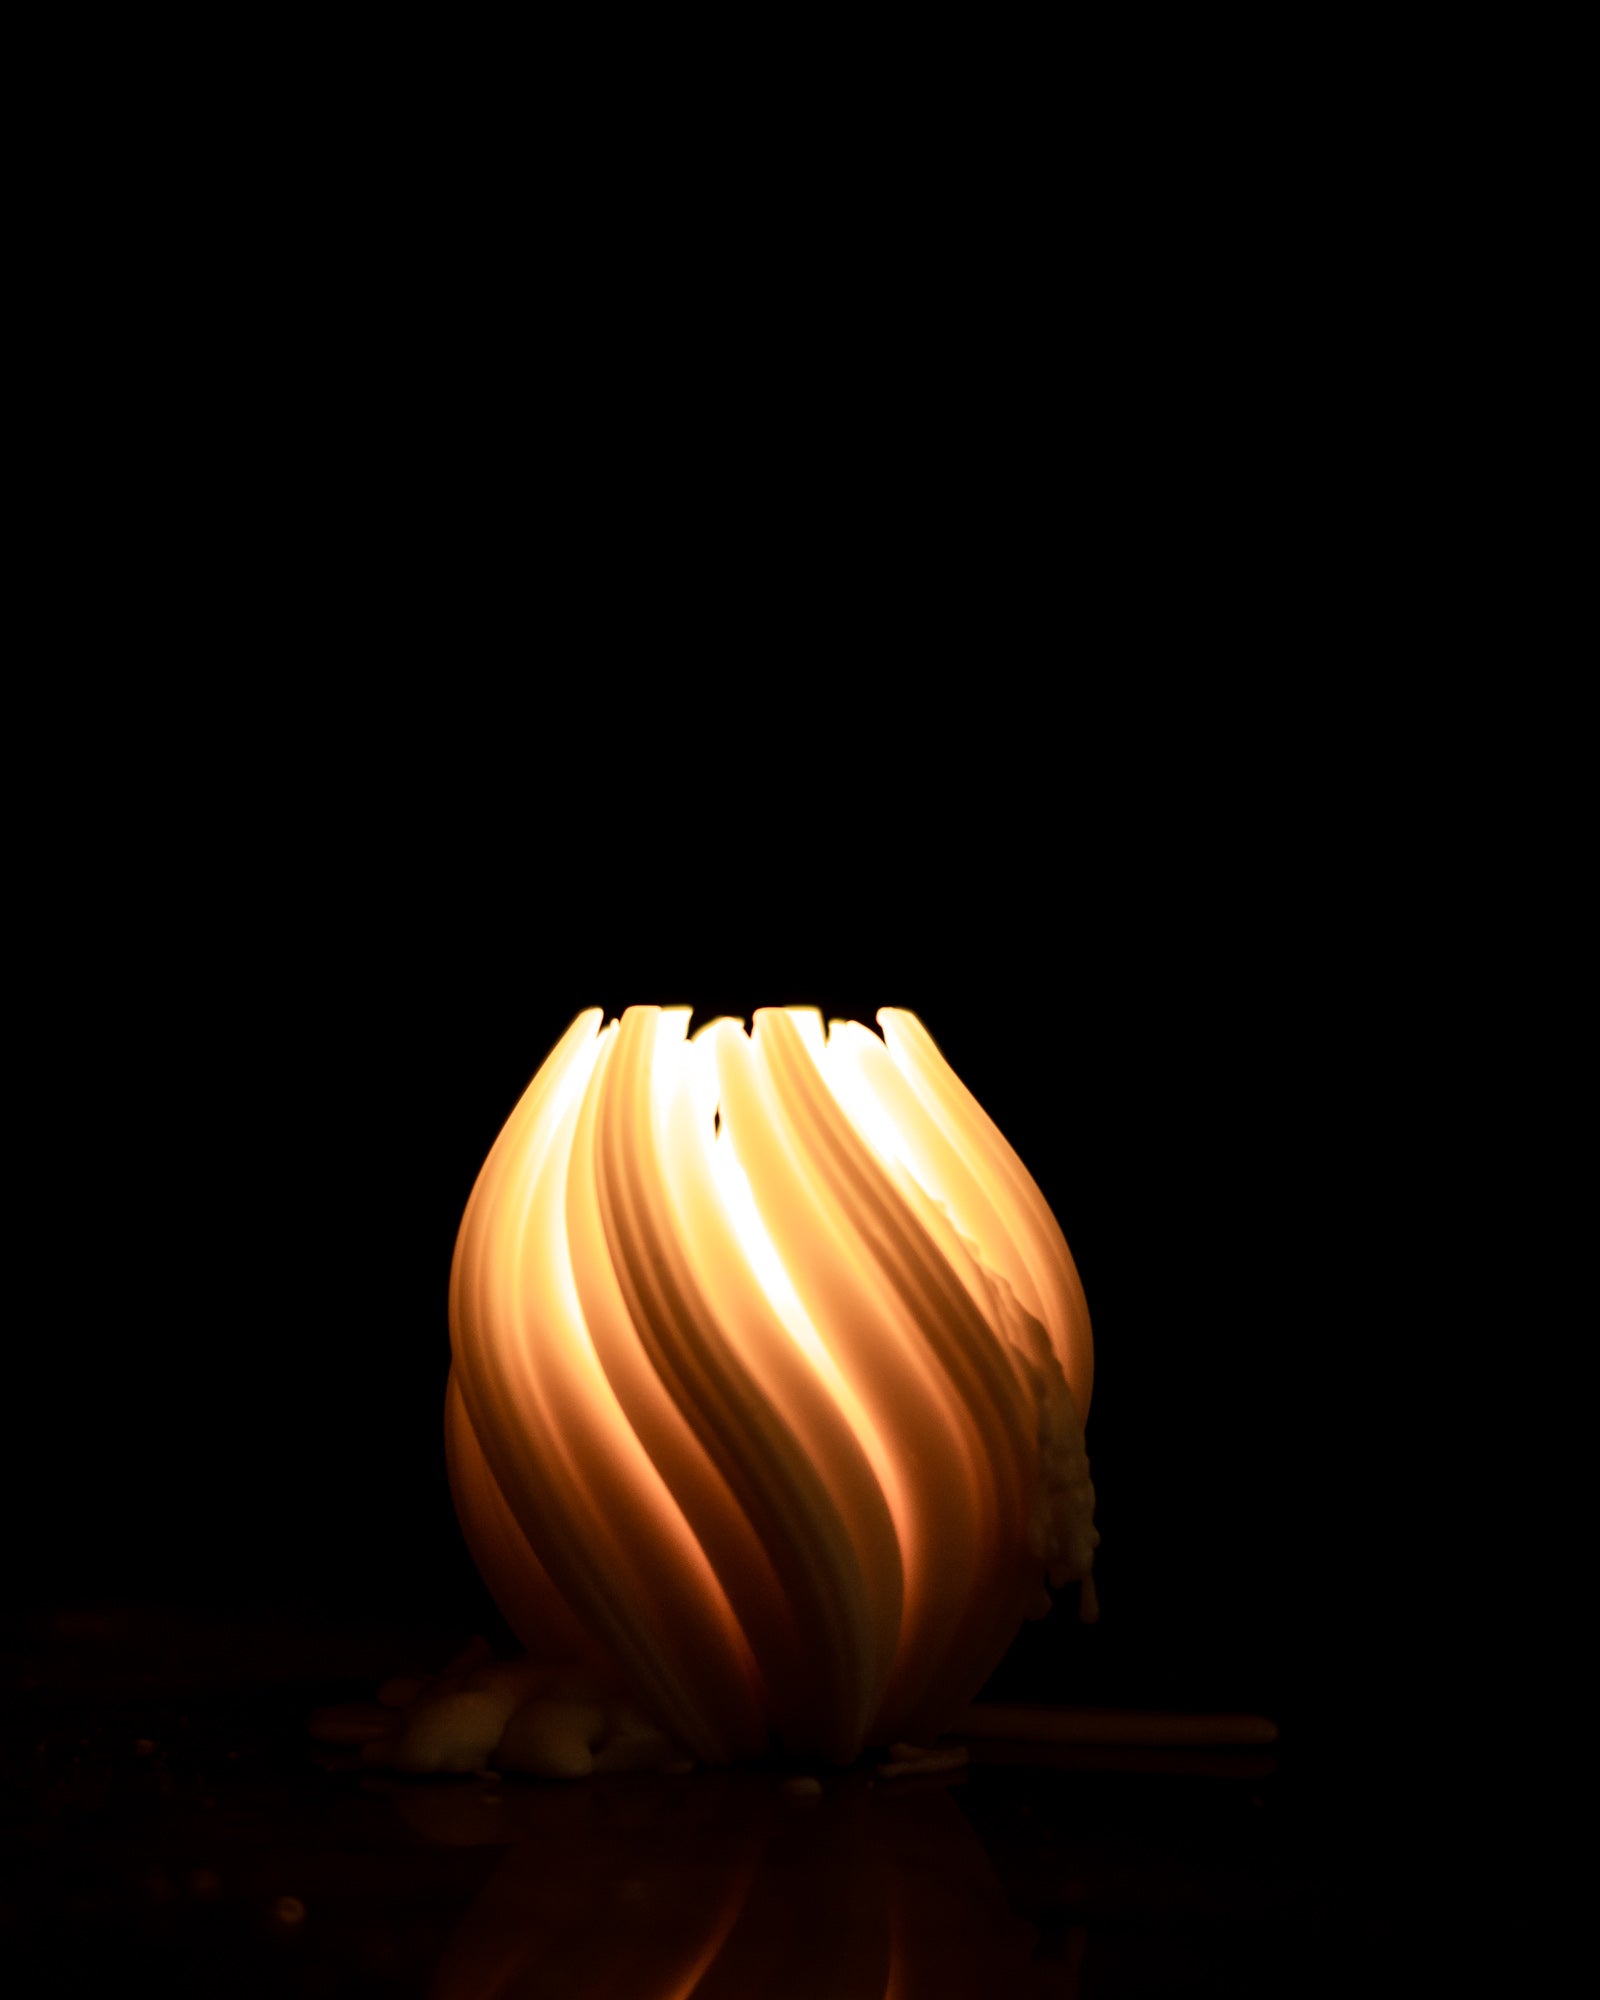 Video of Levi Decorative Candle burning